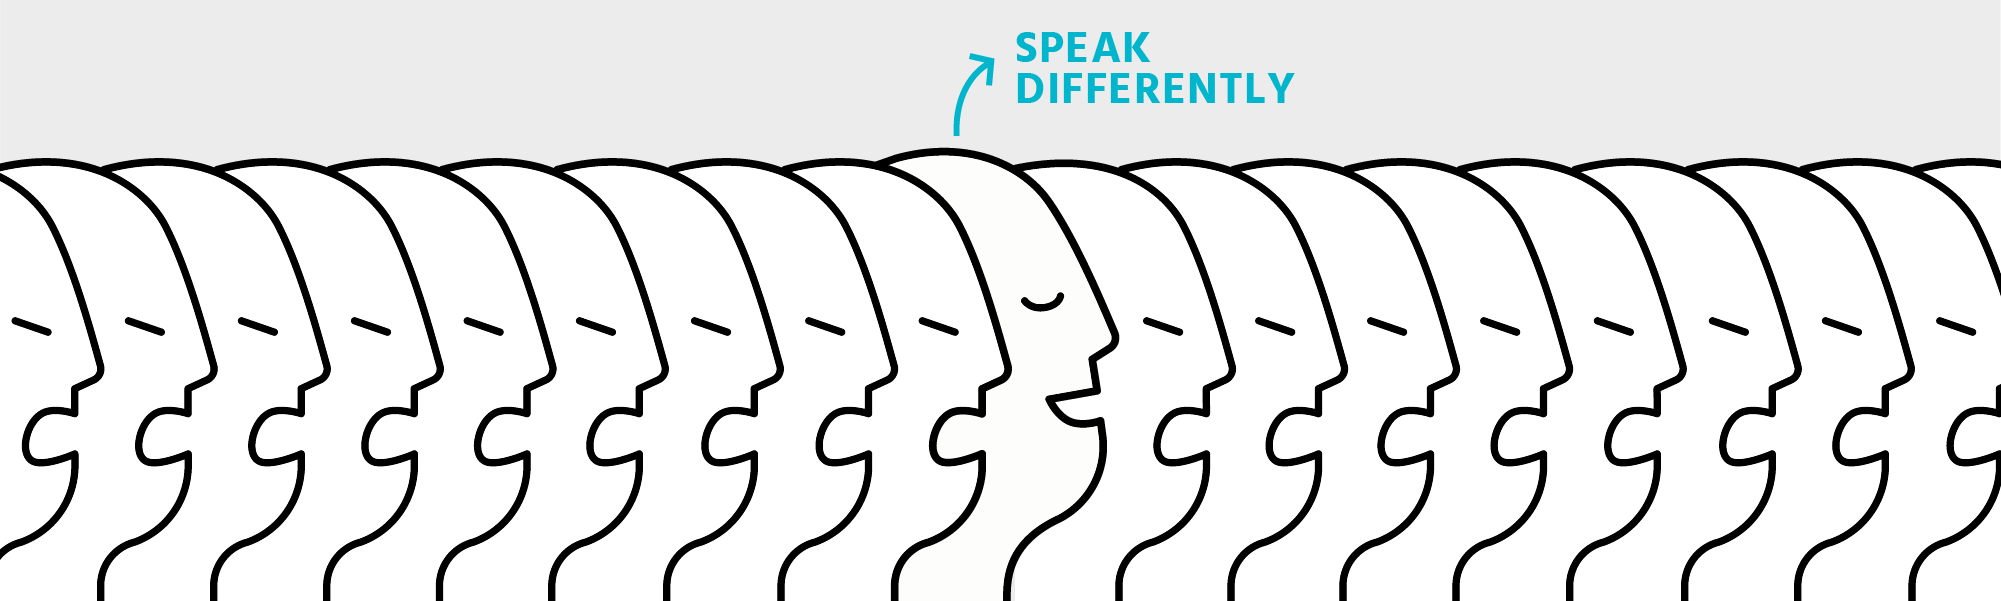 Speak Differently